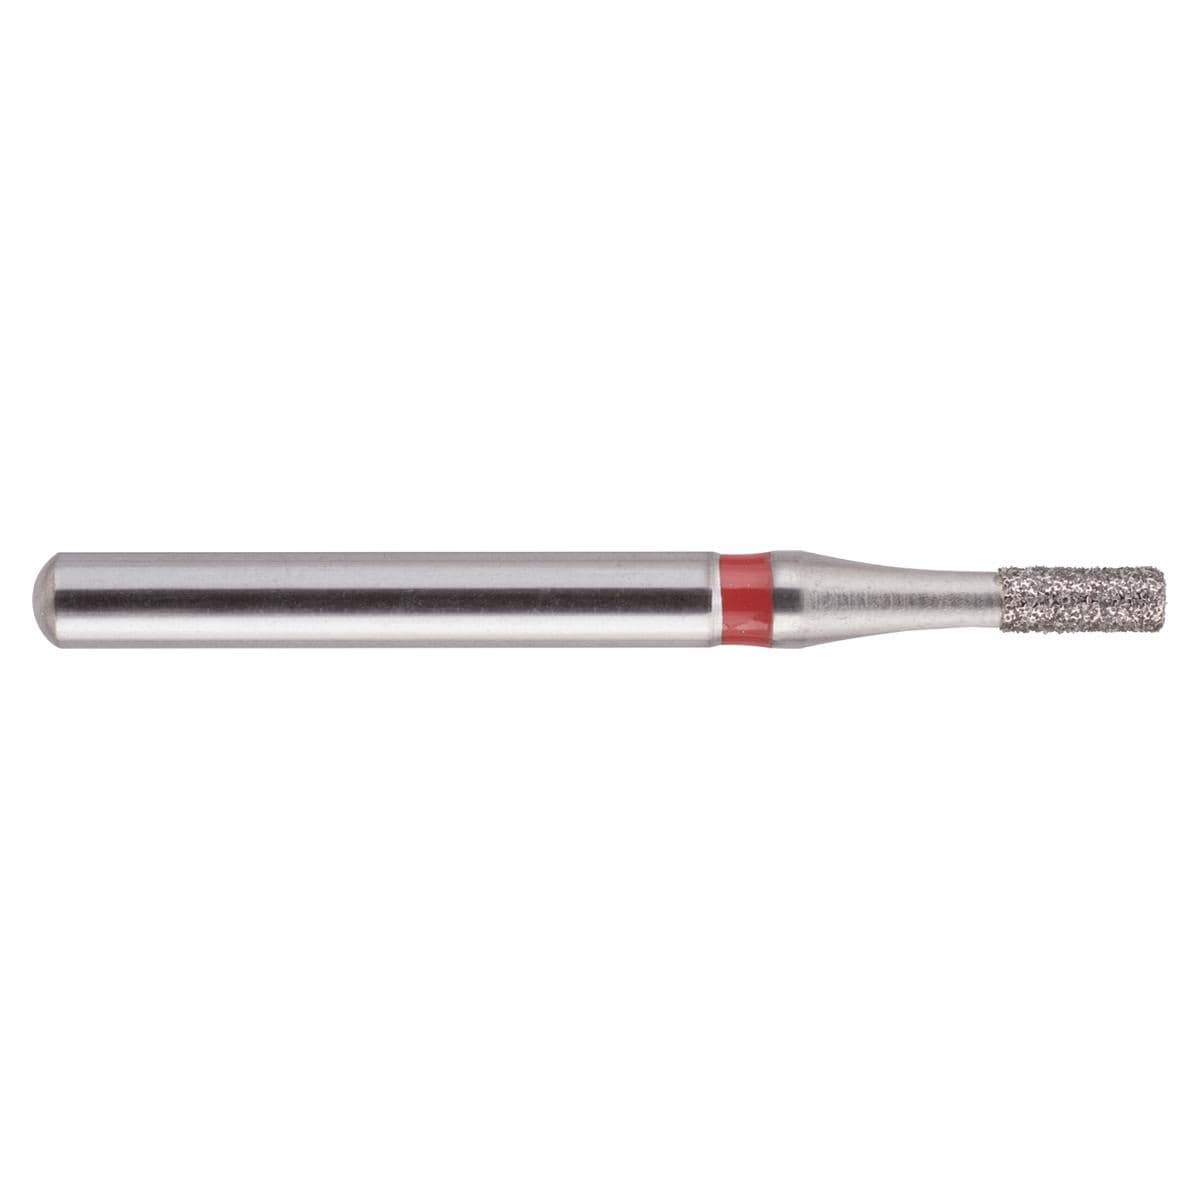 NeoDiamond FG, Form 108, Zylinder flach - ISO 008, fein (rot), kurz, Packung 10 Stück